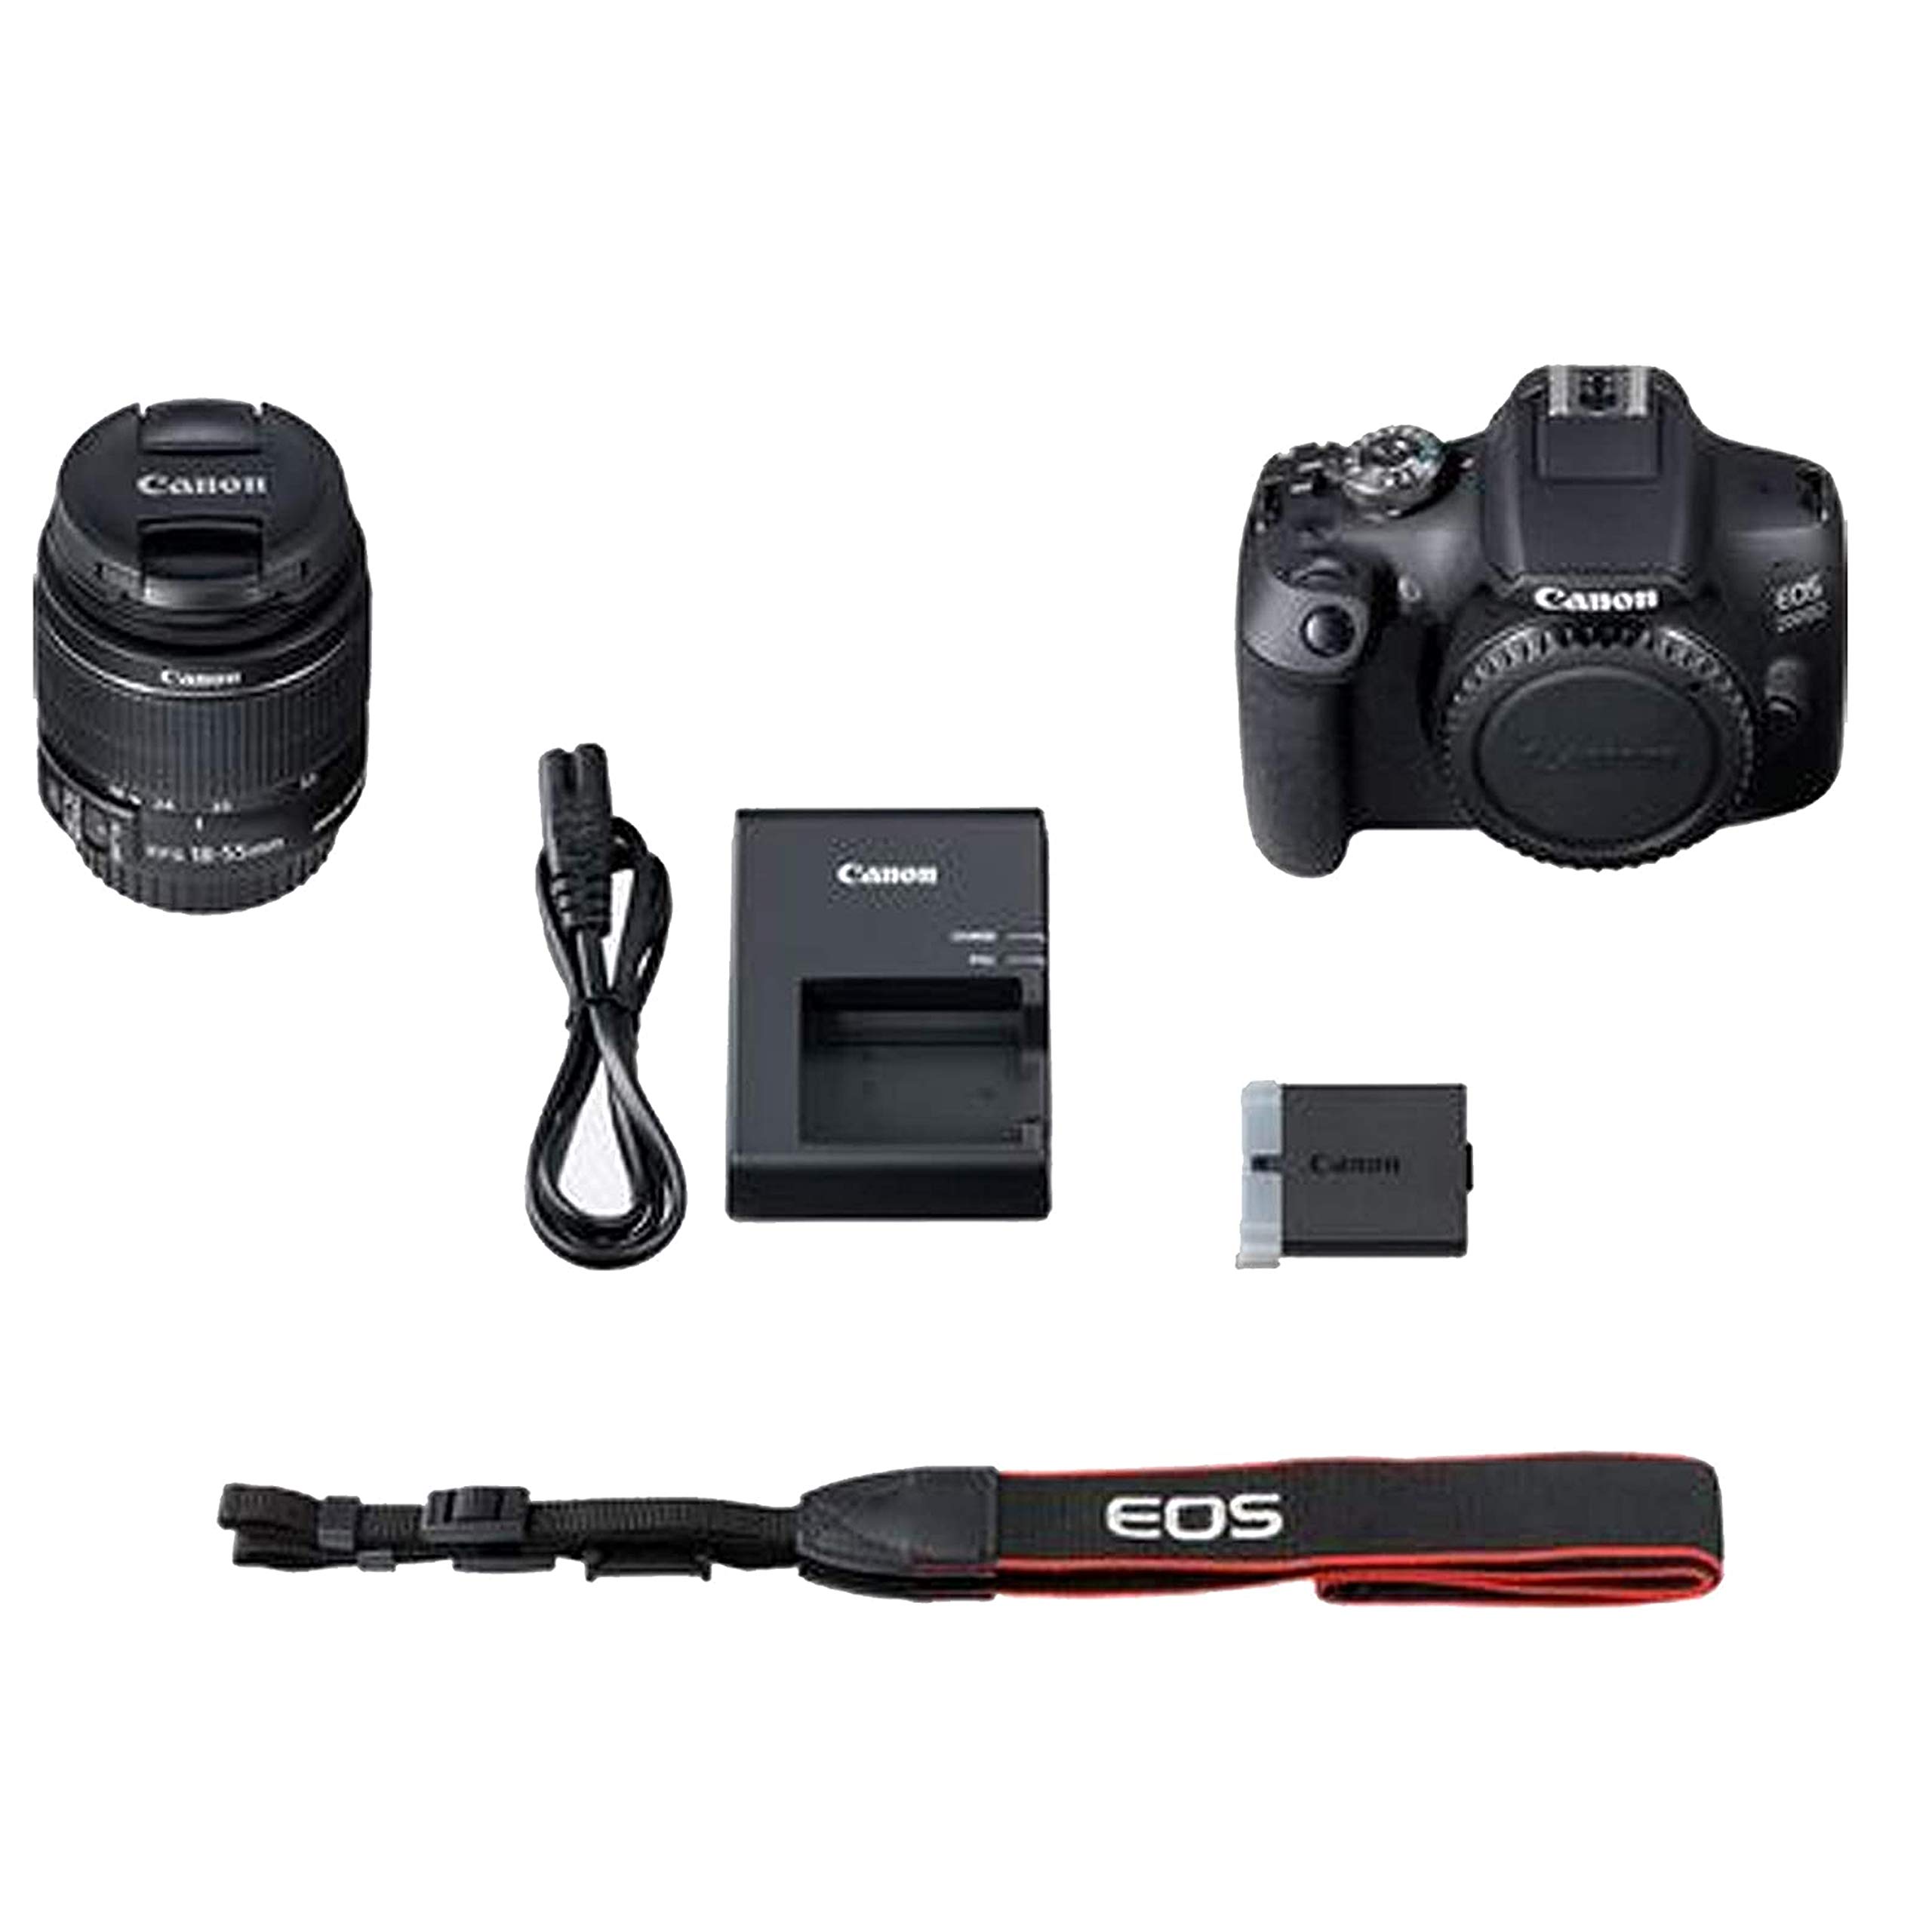 Canon EOS 2000D (Rebel T7) DSLR Camera Bundle with 18-55mm Lens | Built-in Wi-Fi|24.1 MP CMOS Sensor | |DIGIC 4+ Image Processor and Full HD Videos + 64GB Memory(17pcs)